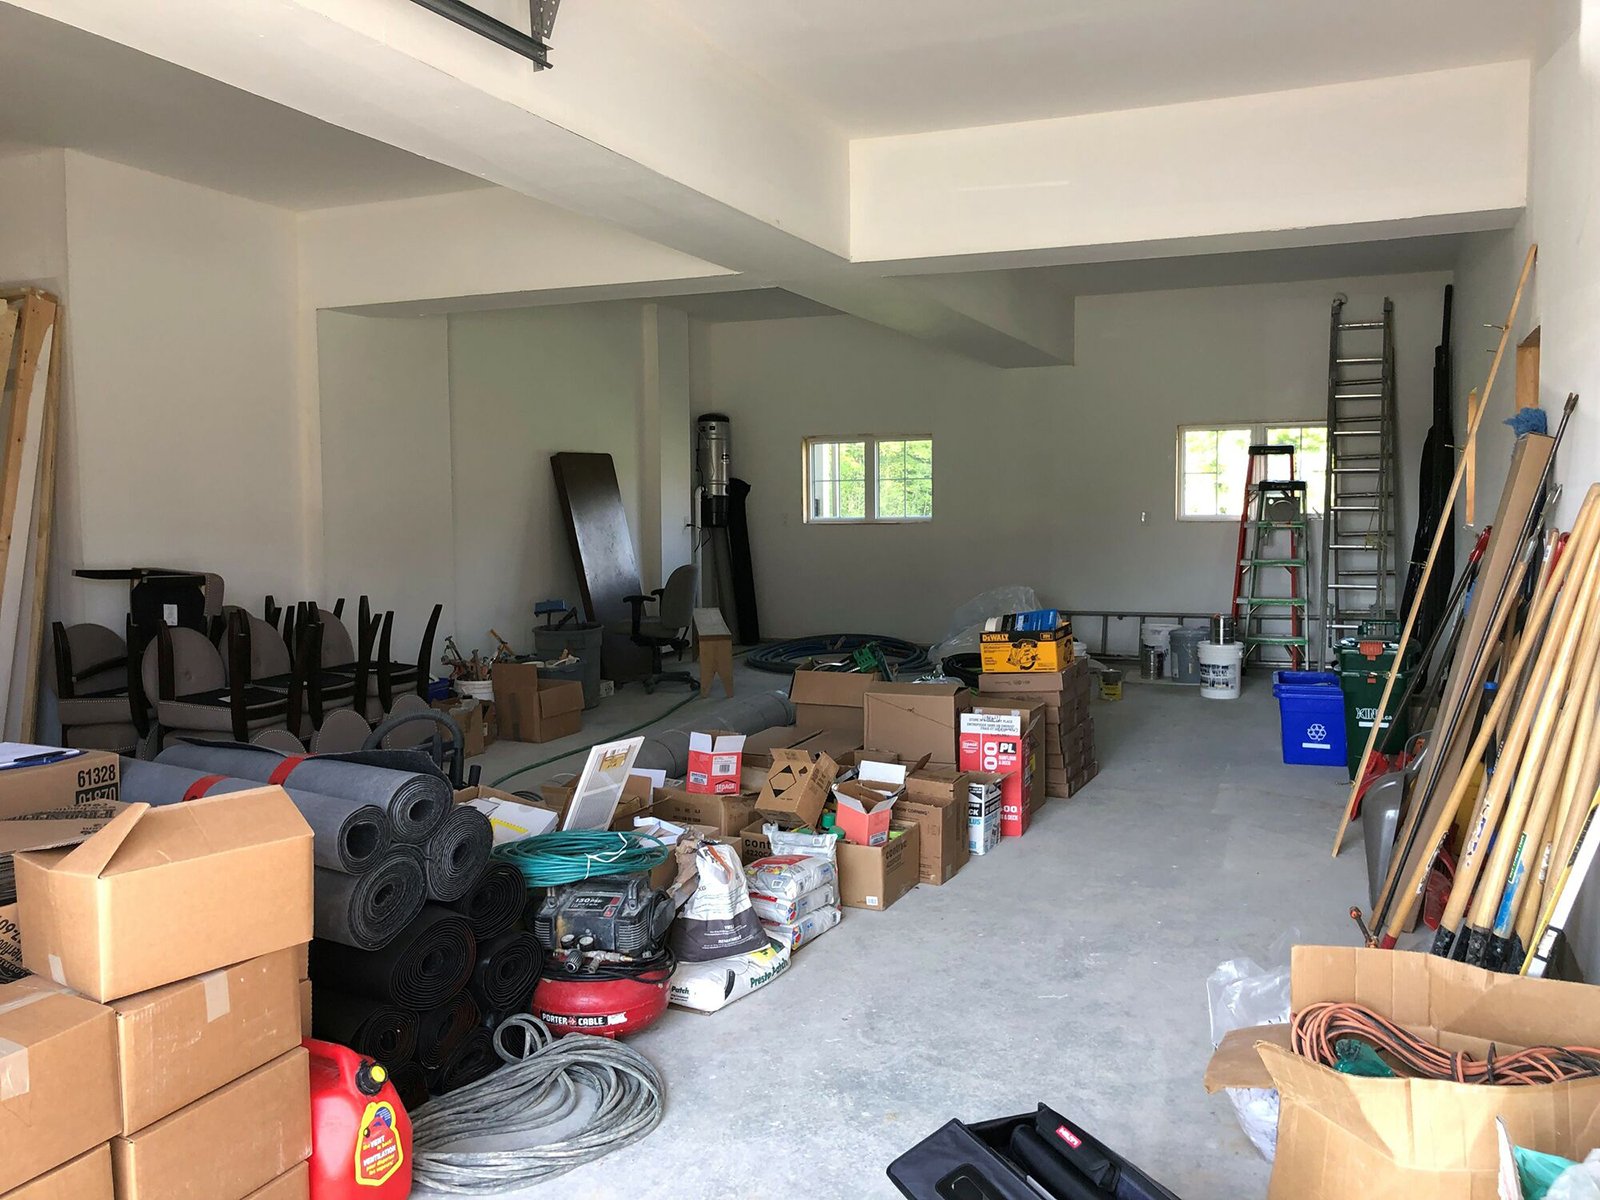 cluttered garage with poor storage